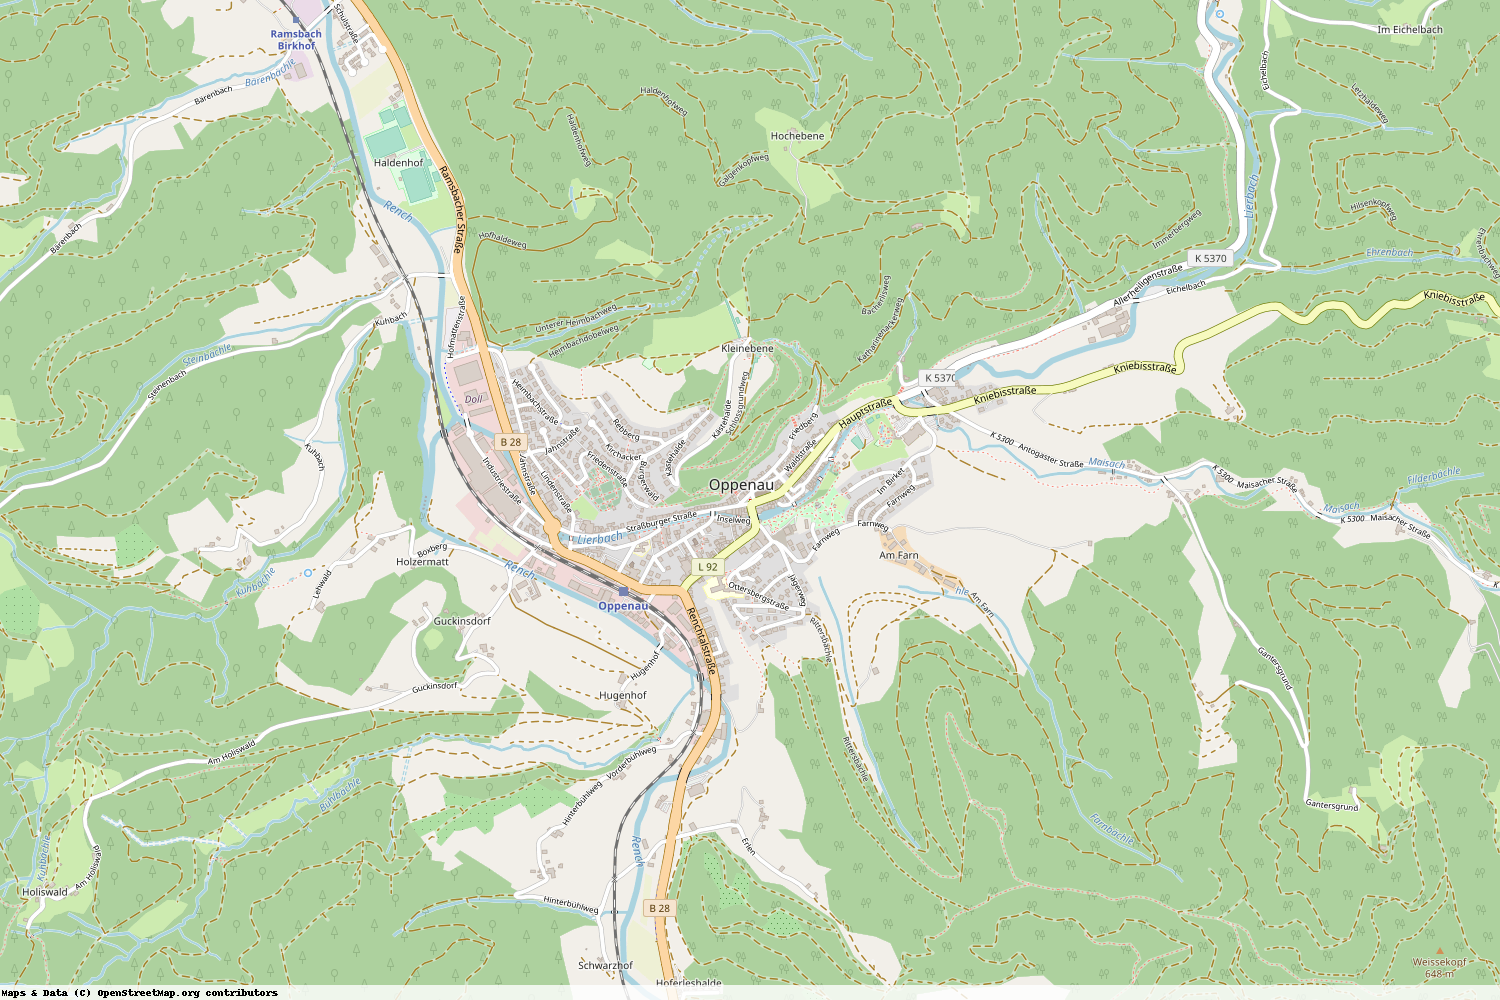 Ist gerade Stromausfall in Baden-Württemberg - Ortenaukreis - Oppenau?